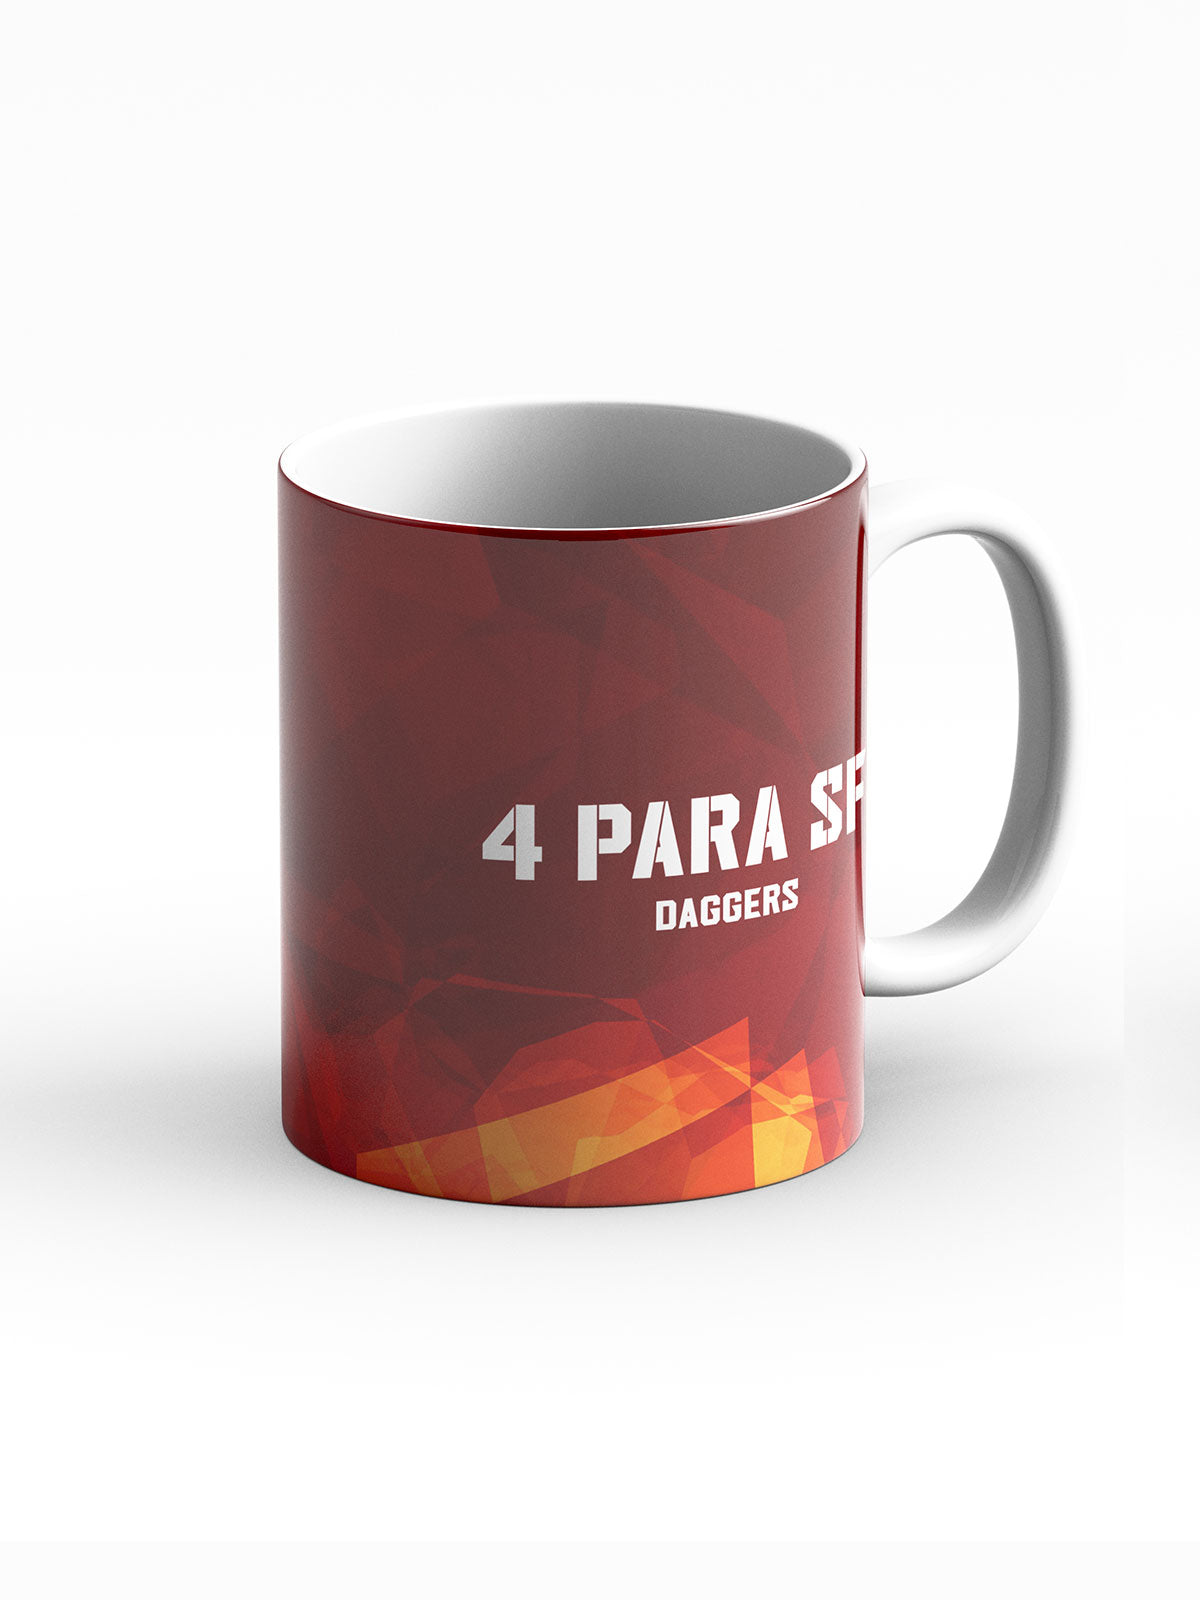 4 PARA SF Coffee Mug